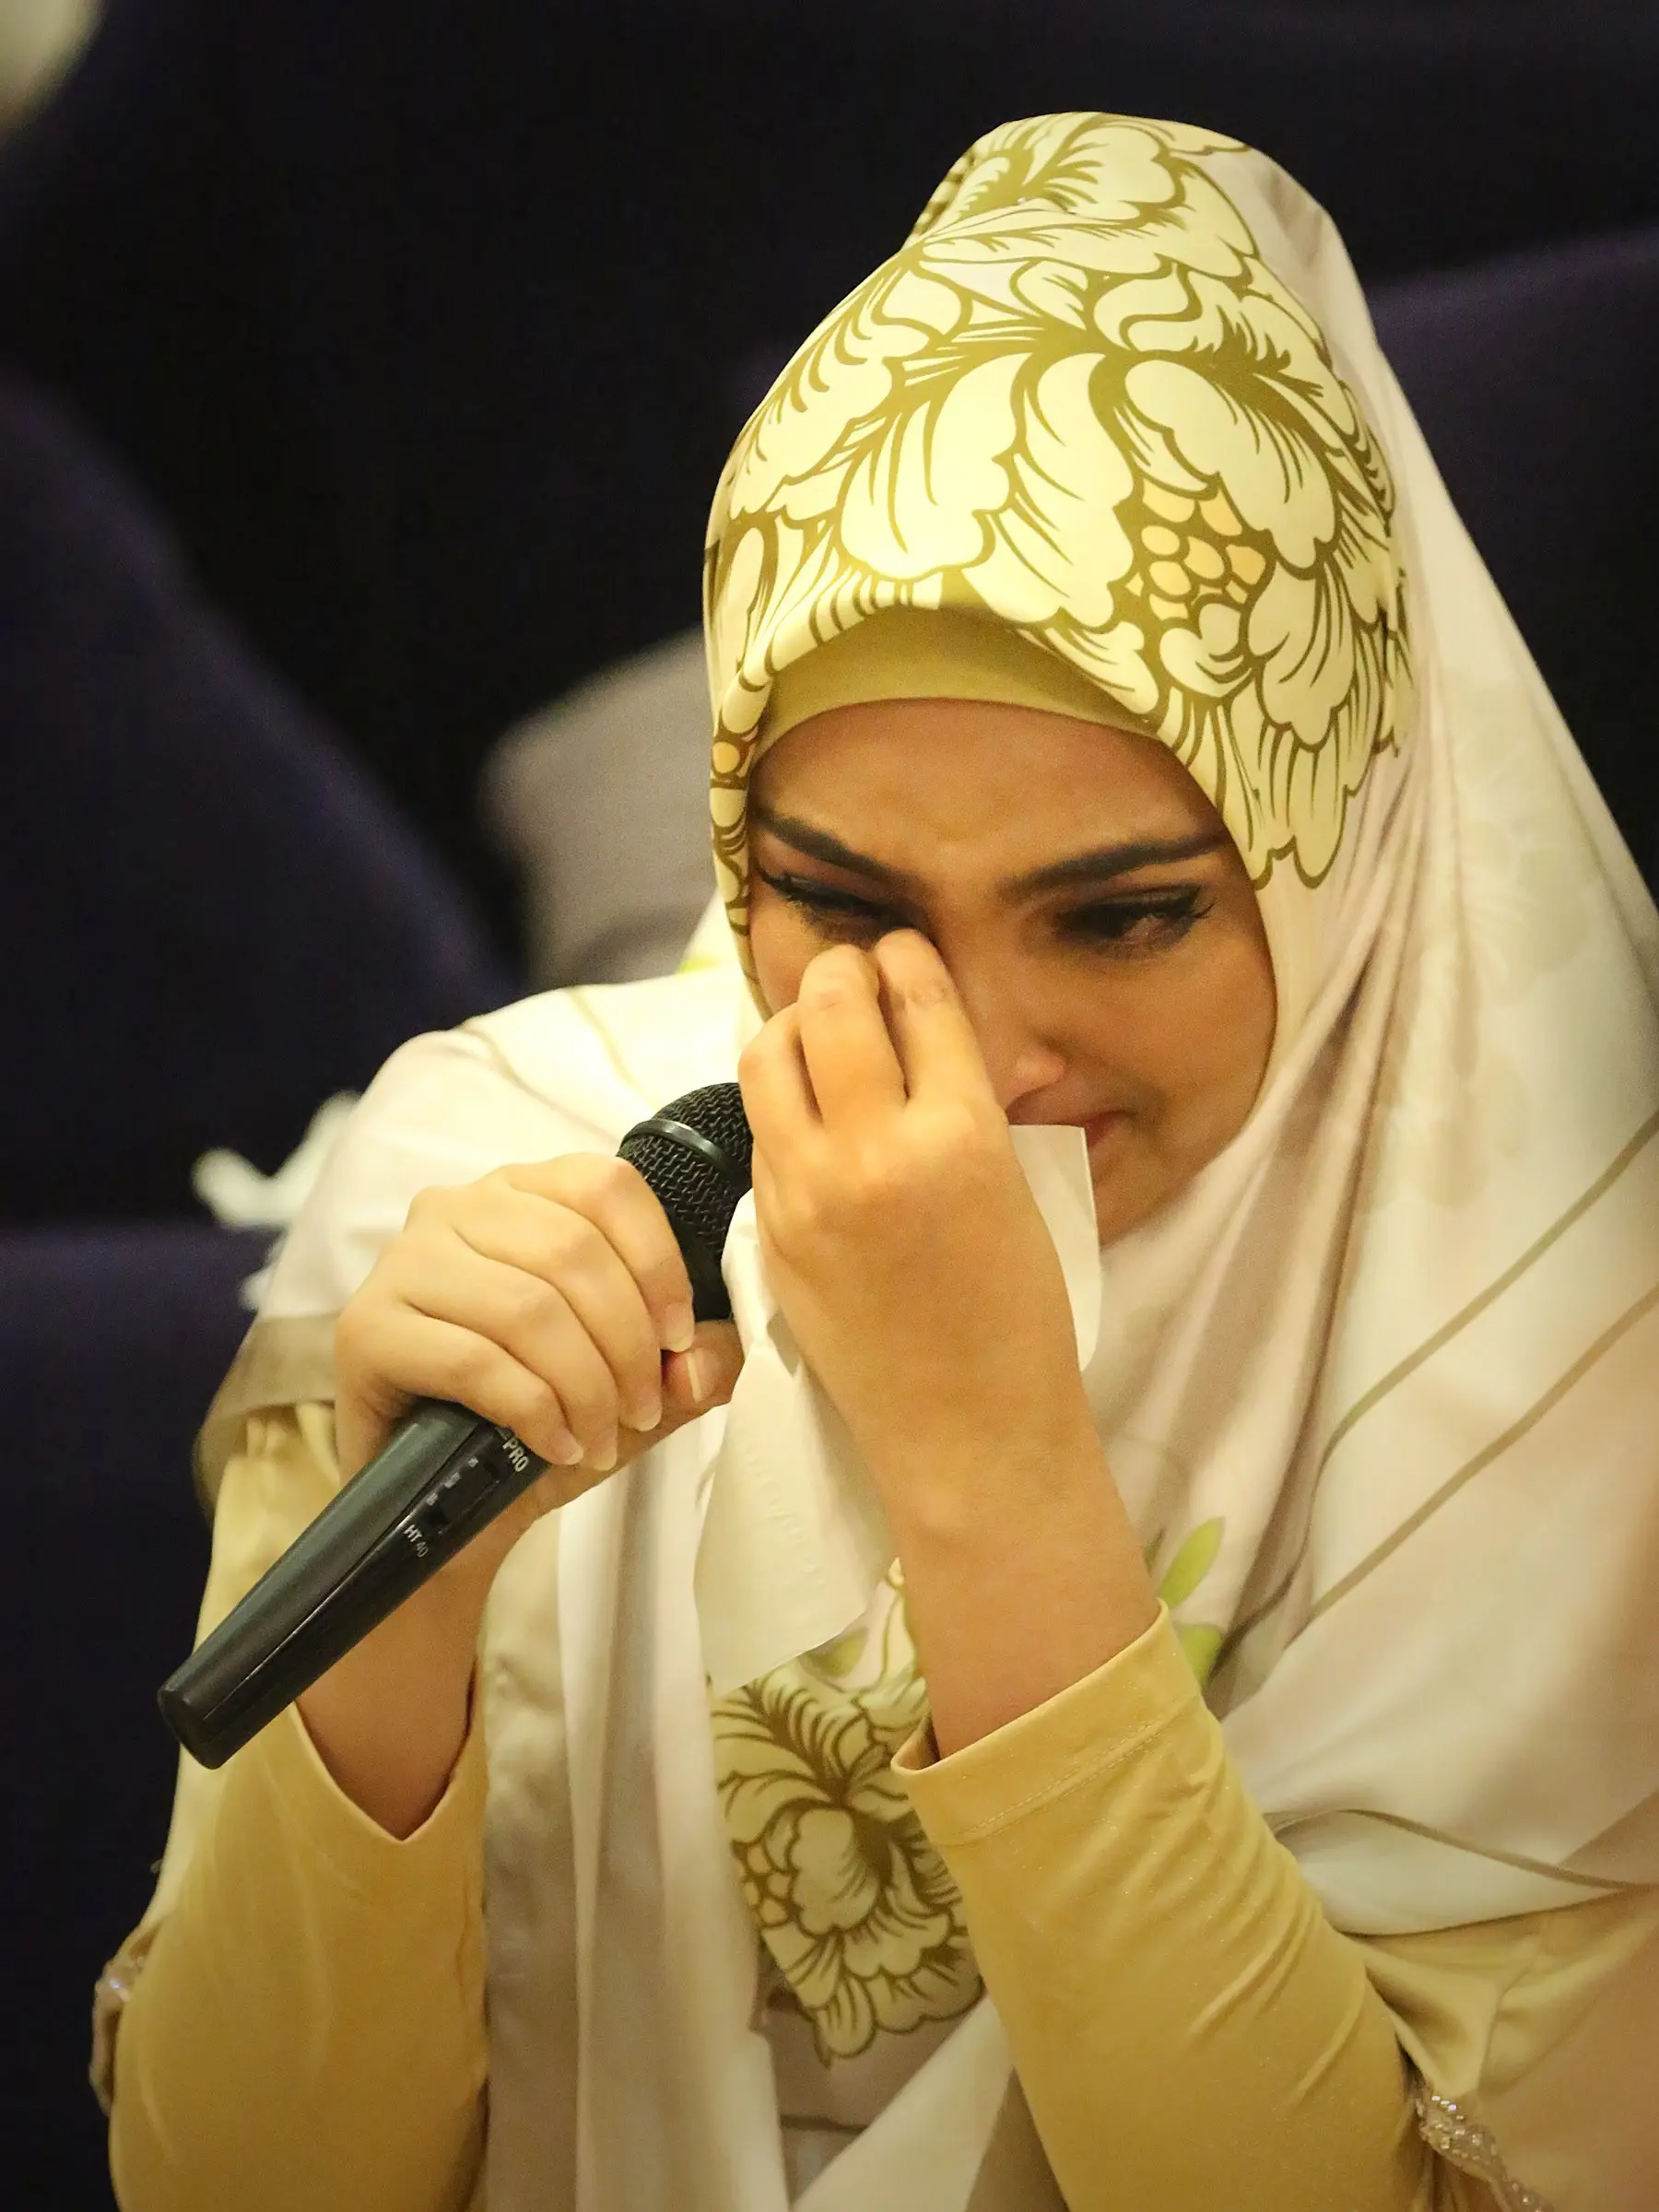 Pada acara pengajian mendoakan alm. Ibundanya,  Ashanty masih menitikkan air mata. (Bambang E. Ros/bintang.com)